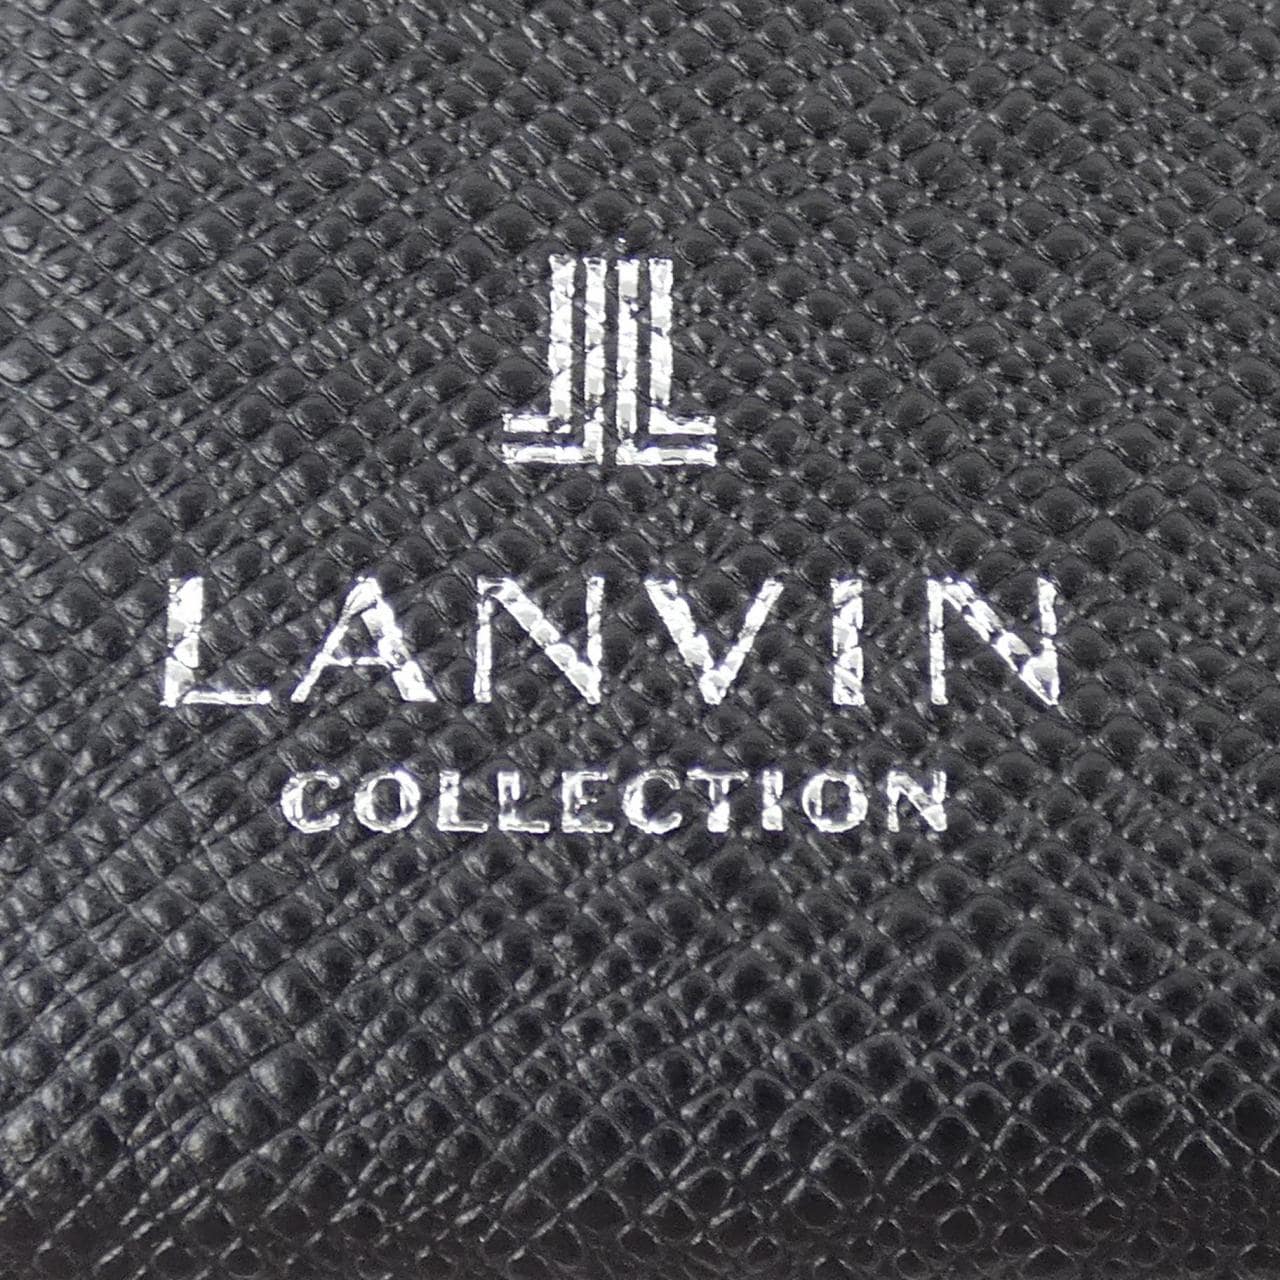 Lanvin collection